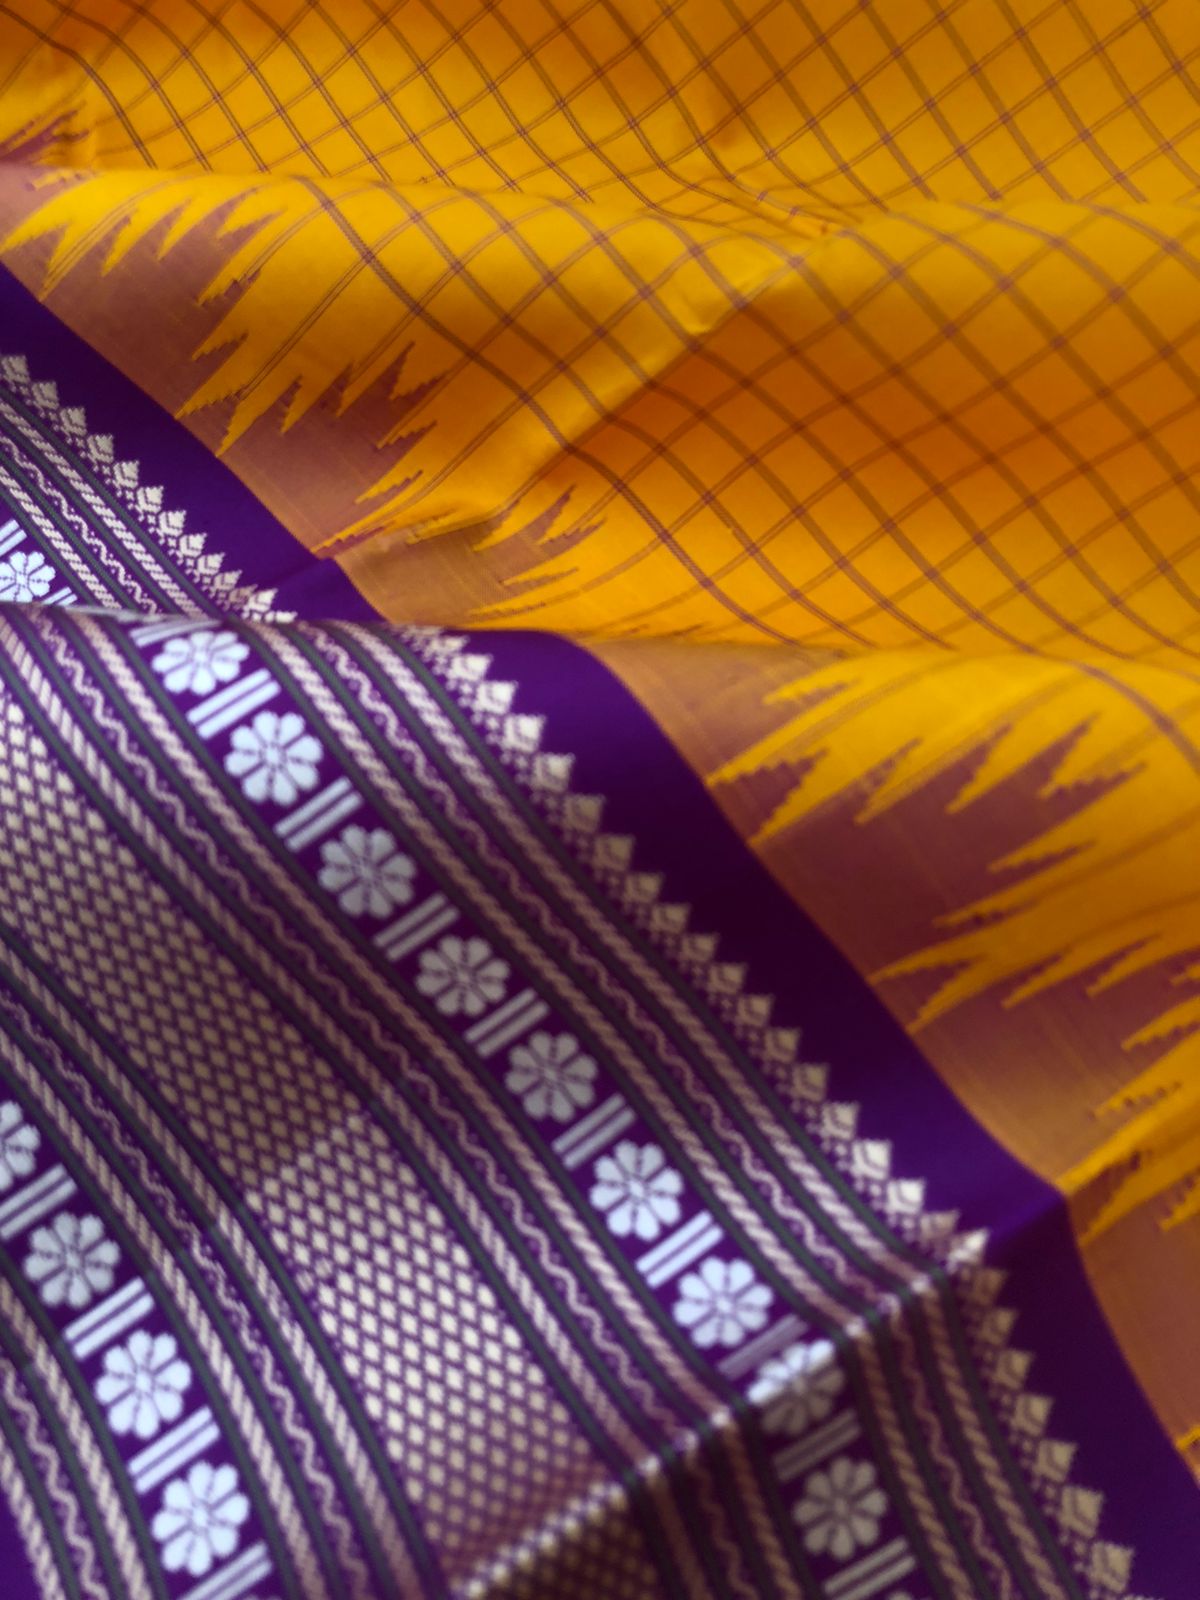 Sahasra - Stunning No Zari Korvai Kanchivarams - amazing mango yellow chex woven body and deep purple varusai pett woven borders